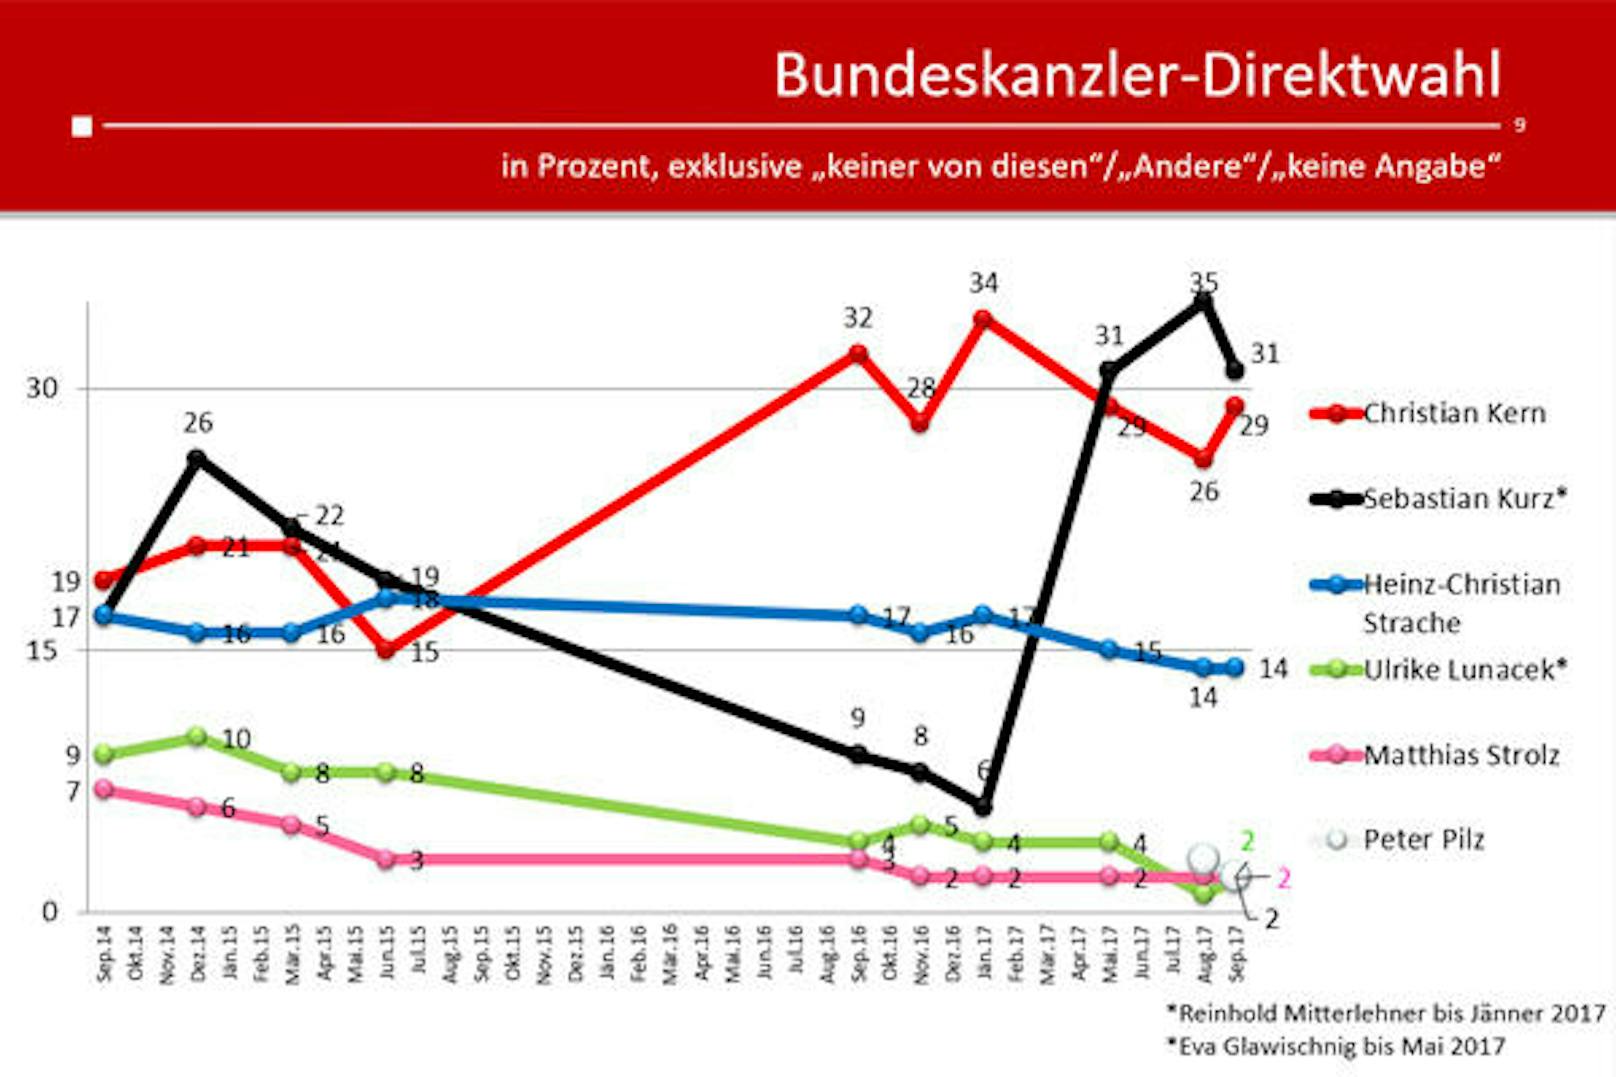 31 Prozent würden Sebastian Kurz direkt zum Kanzler wählen, 29 Prozent Christian Kern und 14 Prozent Heinz-Christian Strache.